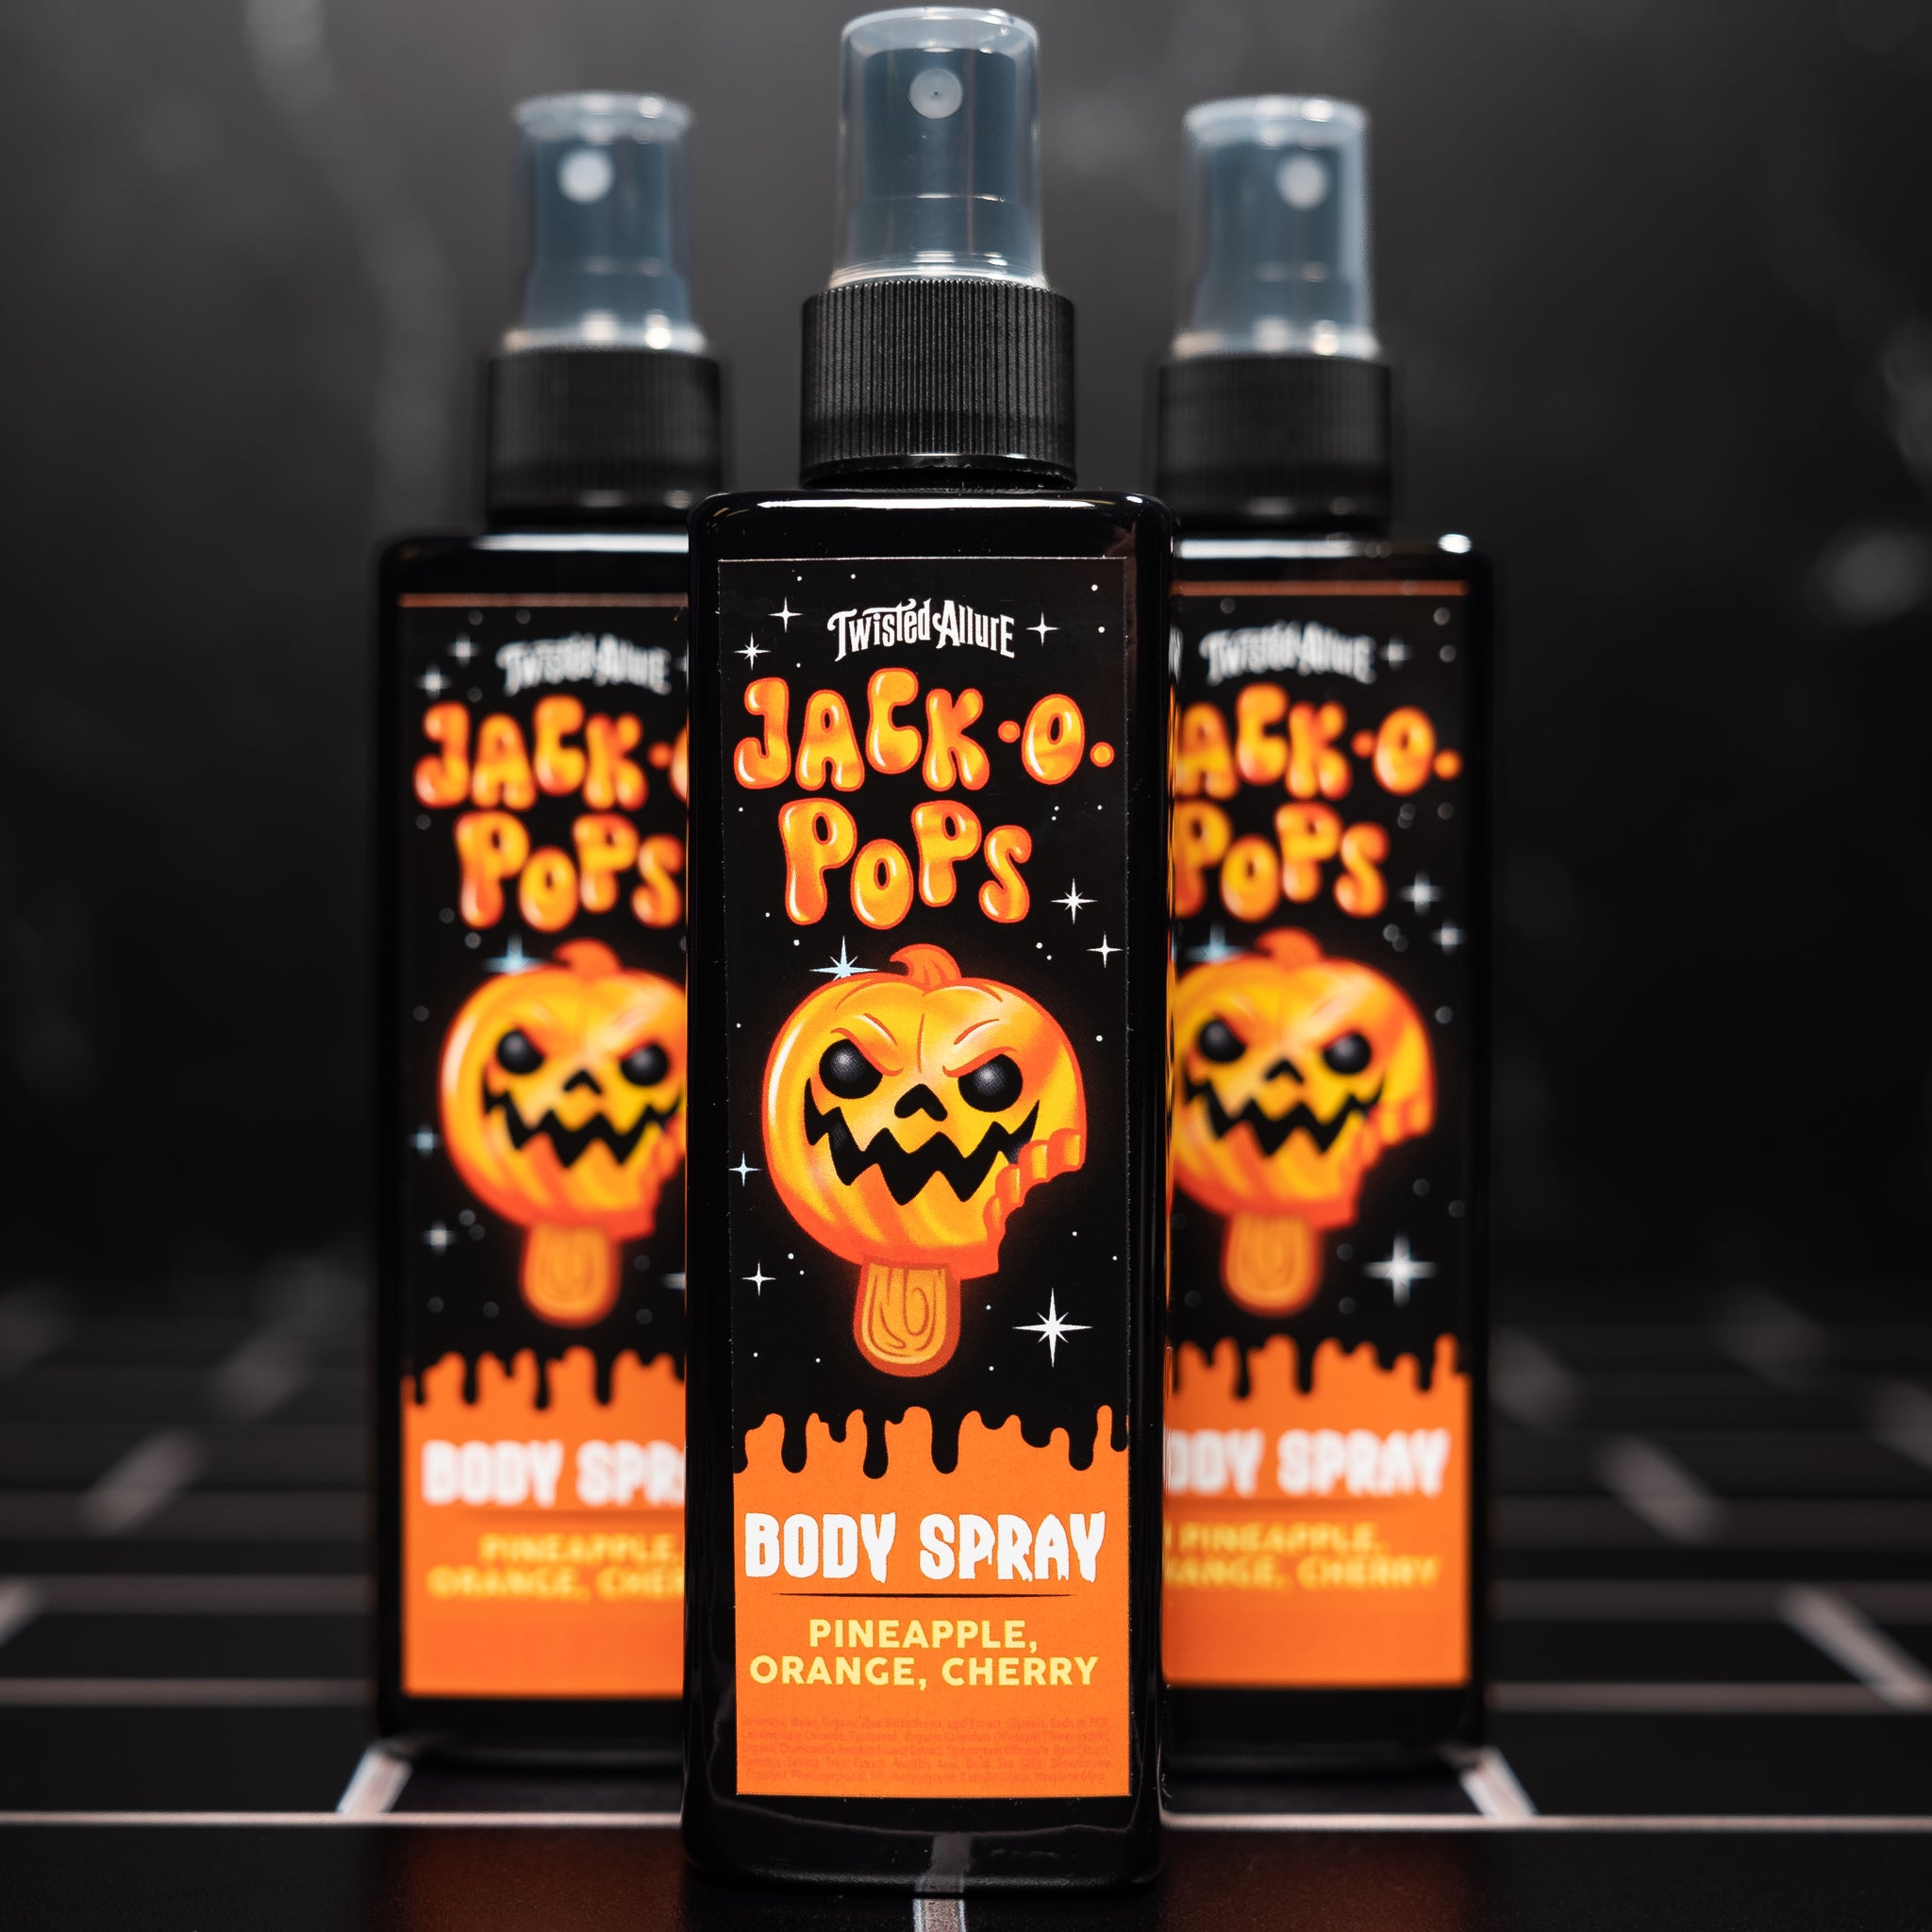 Jack O Pops body spray (pineapple, orange & cherry)